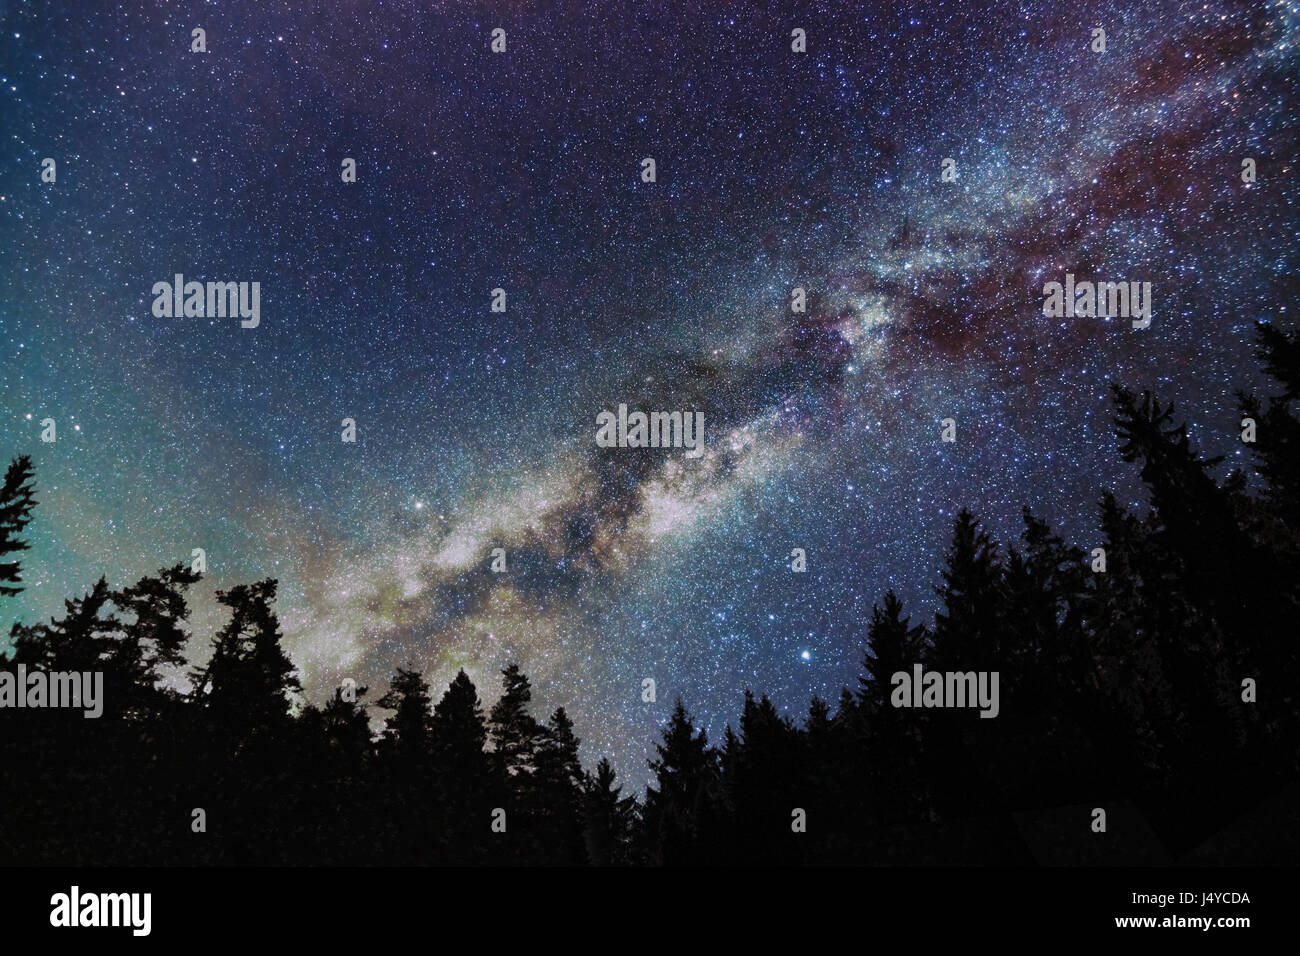 Milky Way Galaxy, Starry sky with trees. Starry night. Stock Photo